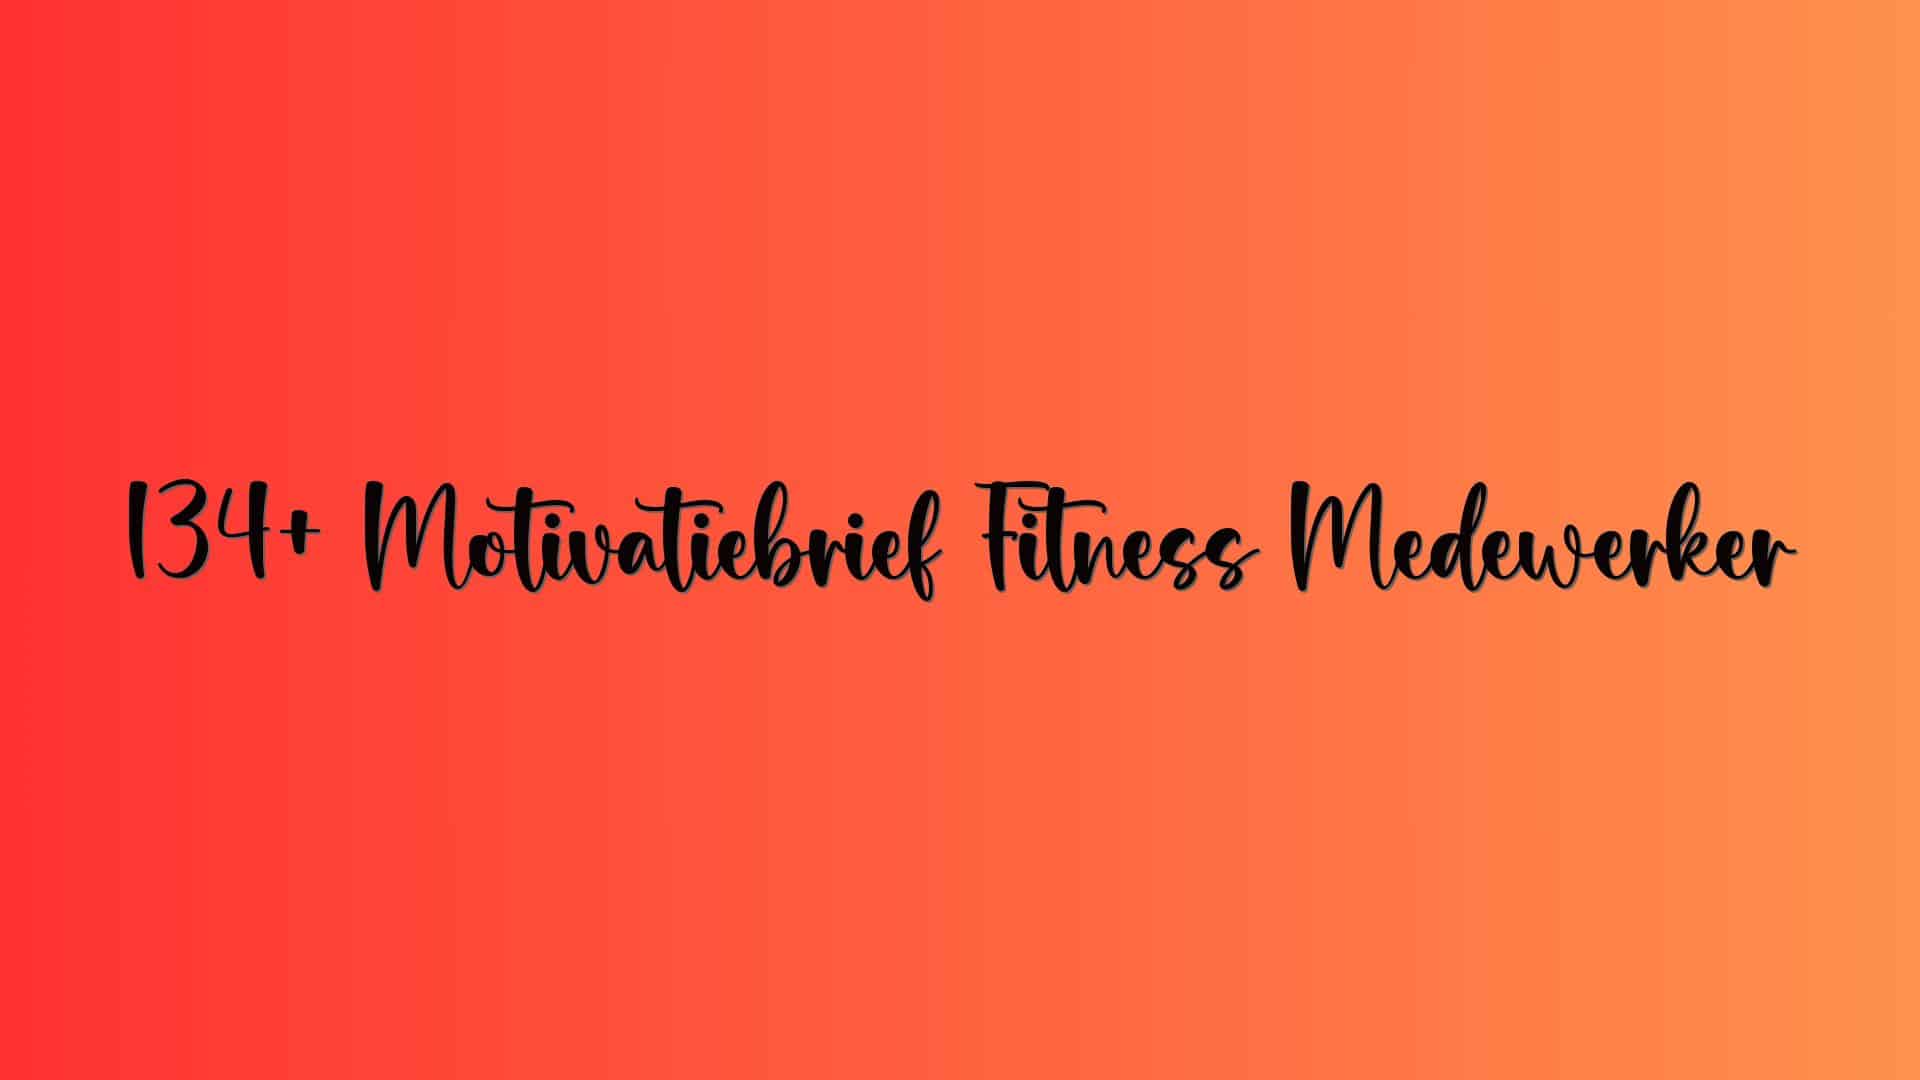 134+ Motivatiebrief Fitness Medewerker